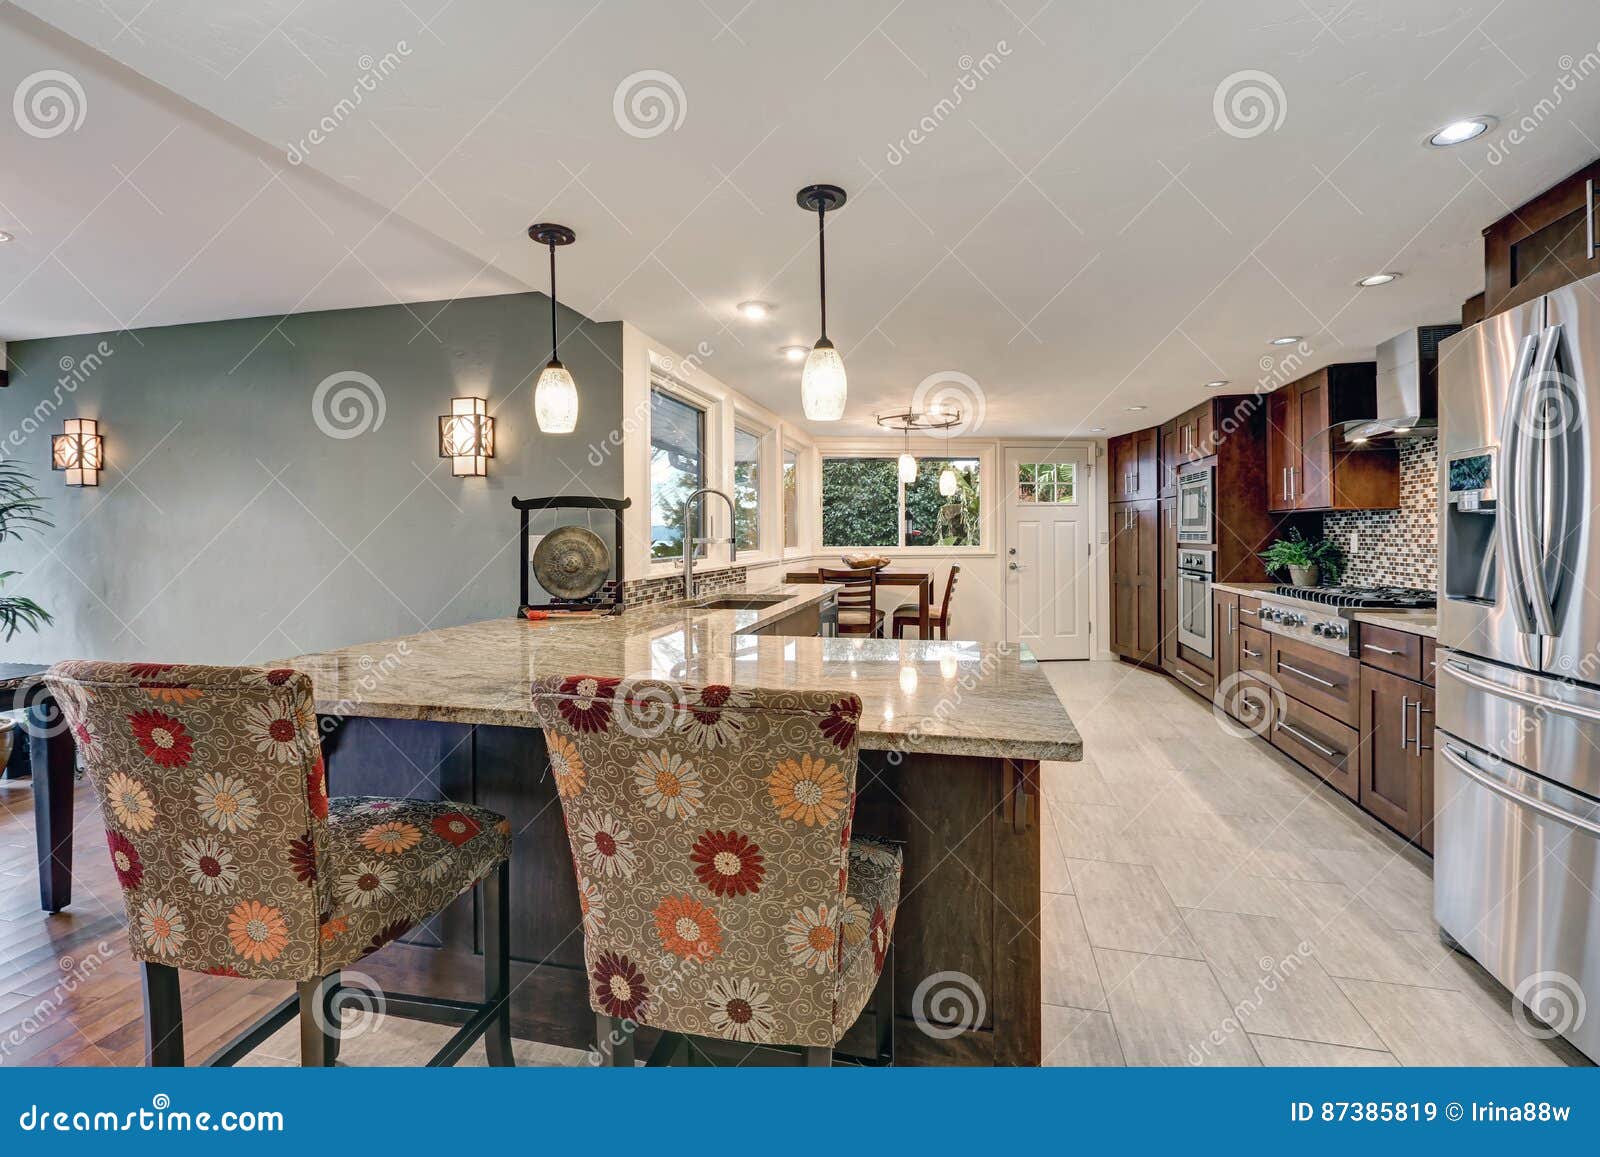 Beautiful Modernized Epicurean Kitchen Stock Image Image Of Flat